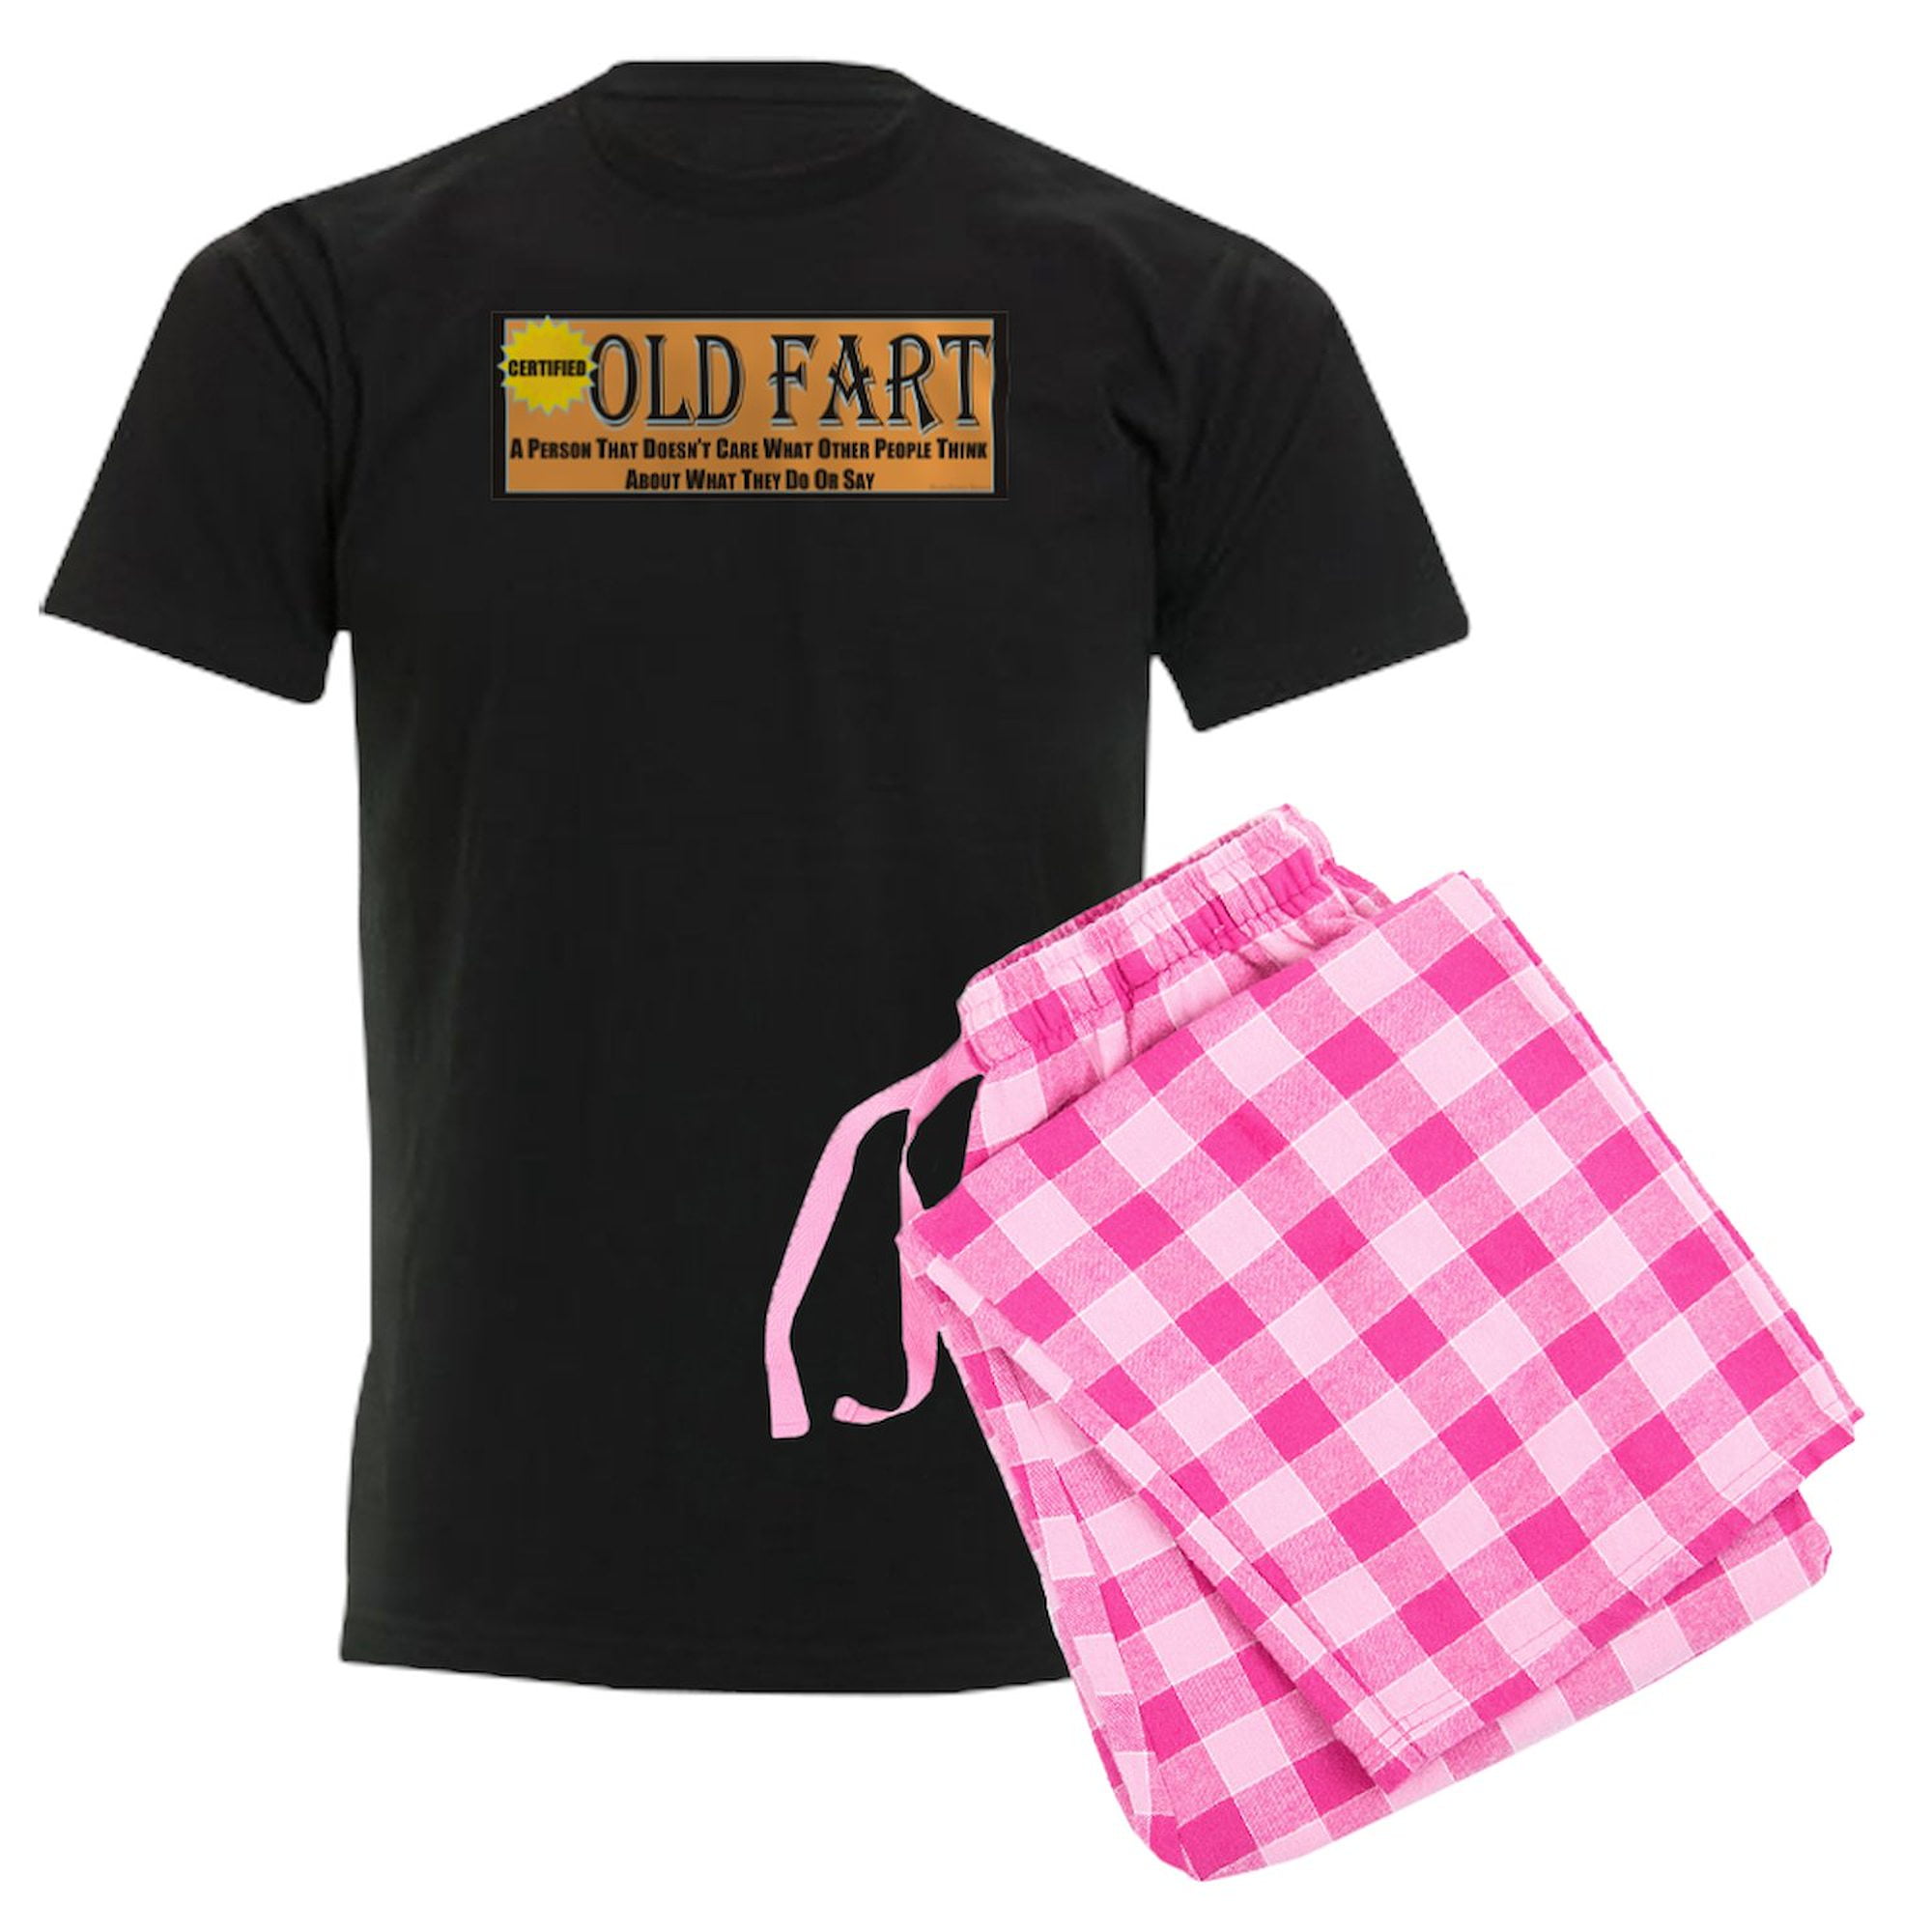 CafePress - Old Fart Motto Pajamas - Men's Dark Loose Fit Cotton Pajama ...